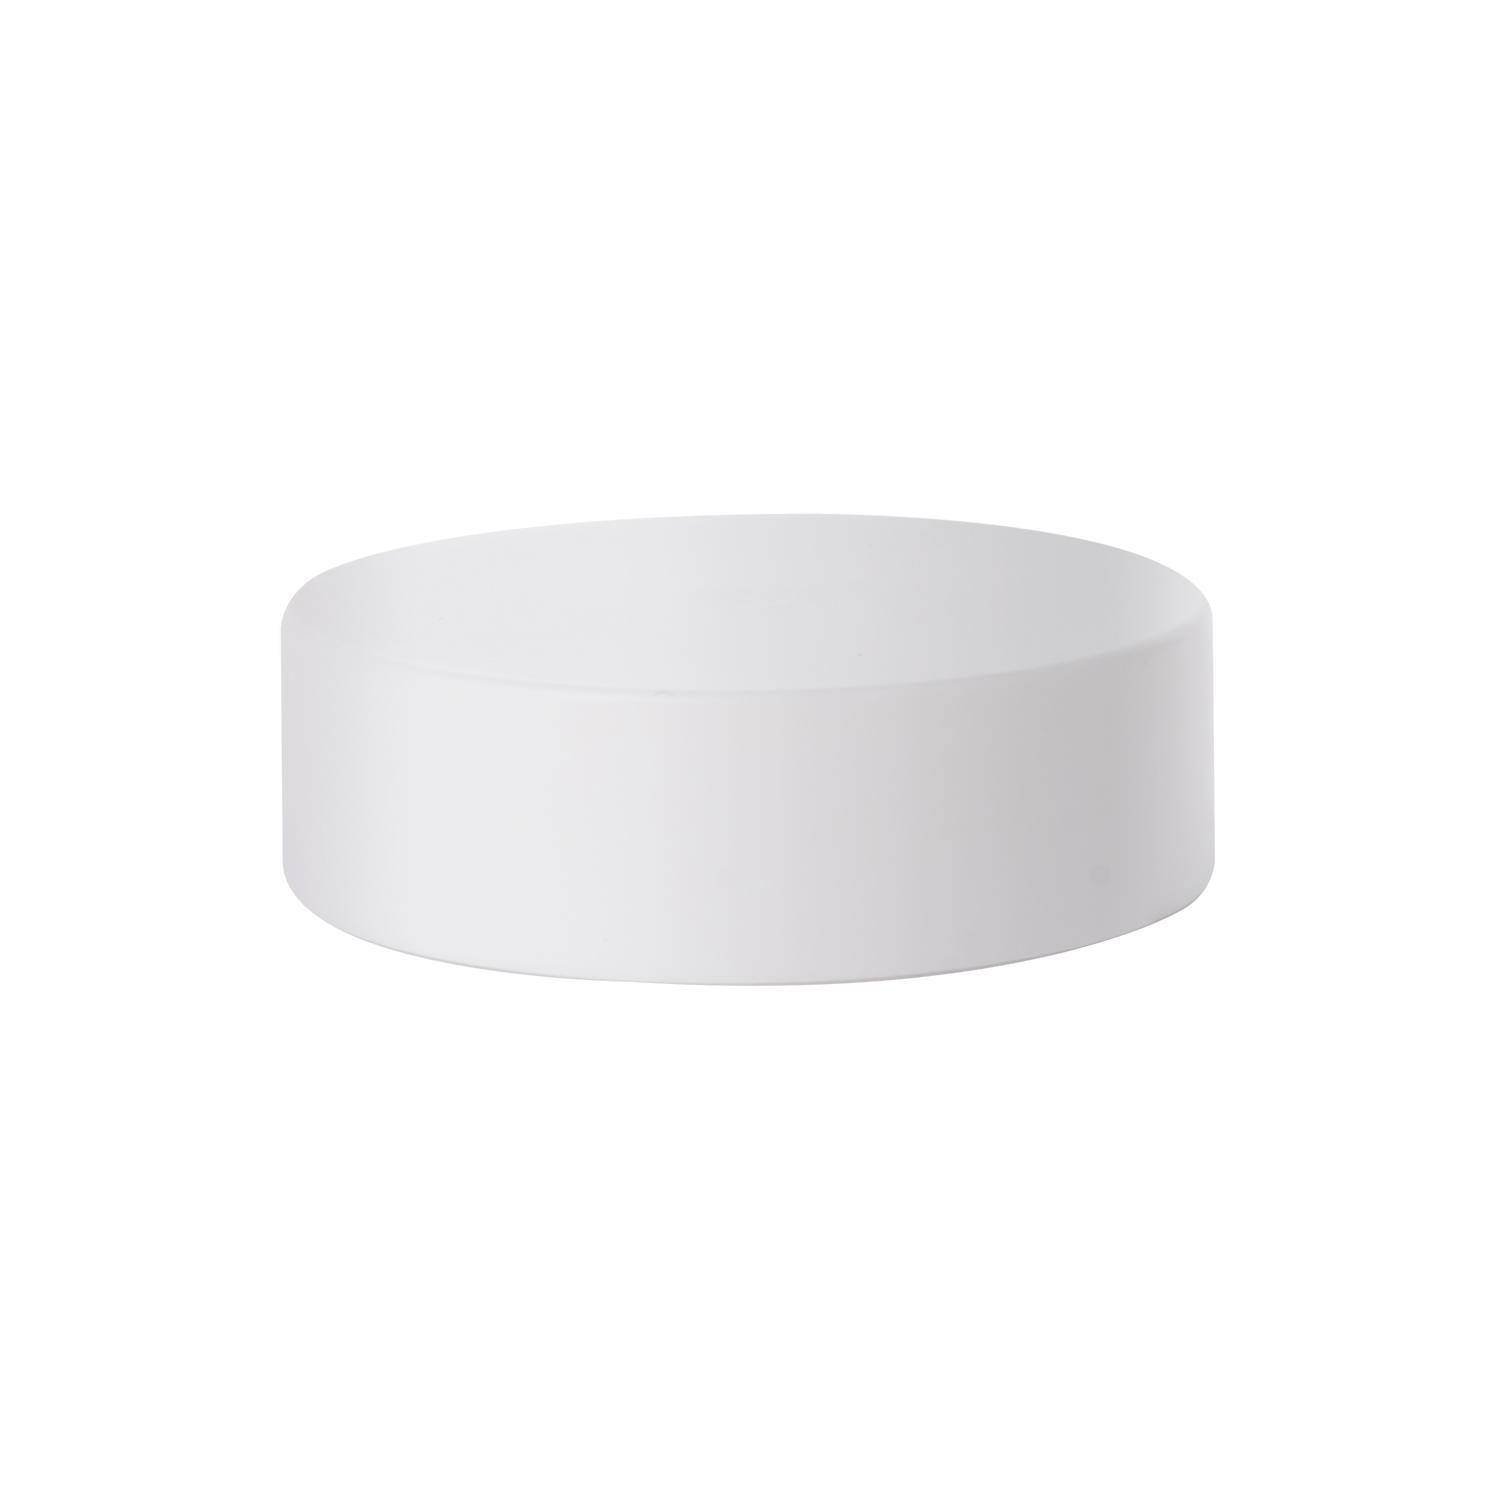 30g 50g 80g 100g PP（30%—100%PCR）cream Jars Wholesale Cosmetic Jar Plastic Cosmetic Jars Wholesale